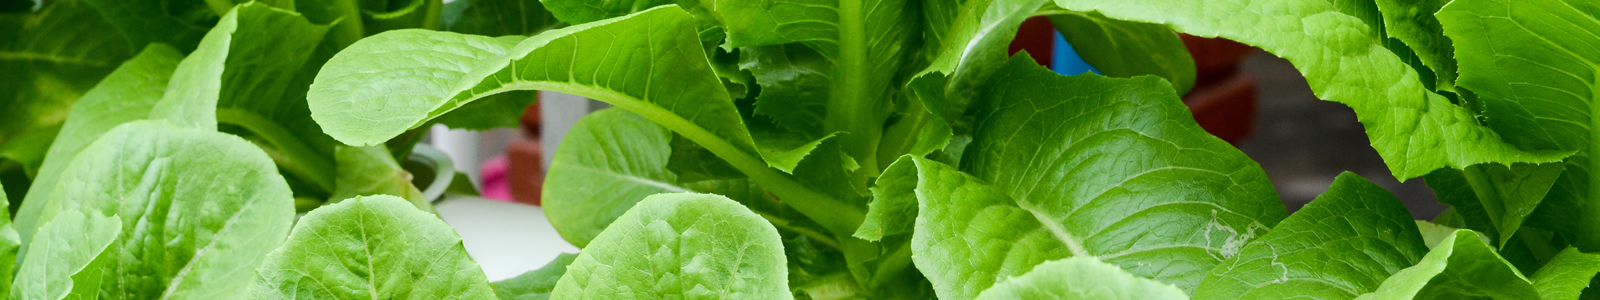 vegetable and leafy plant food